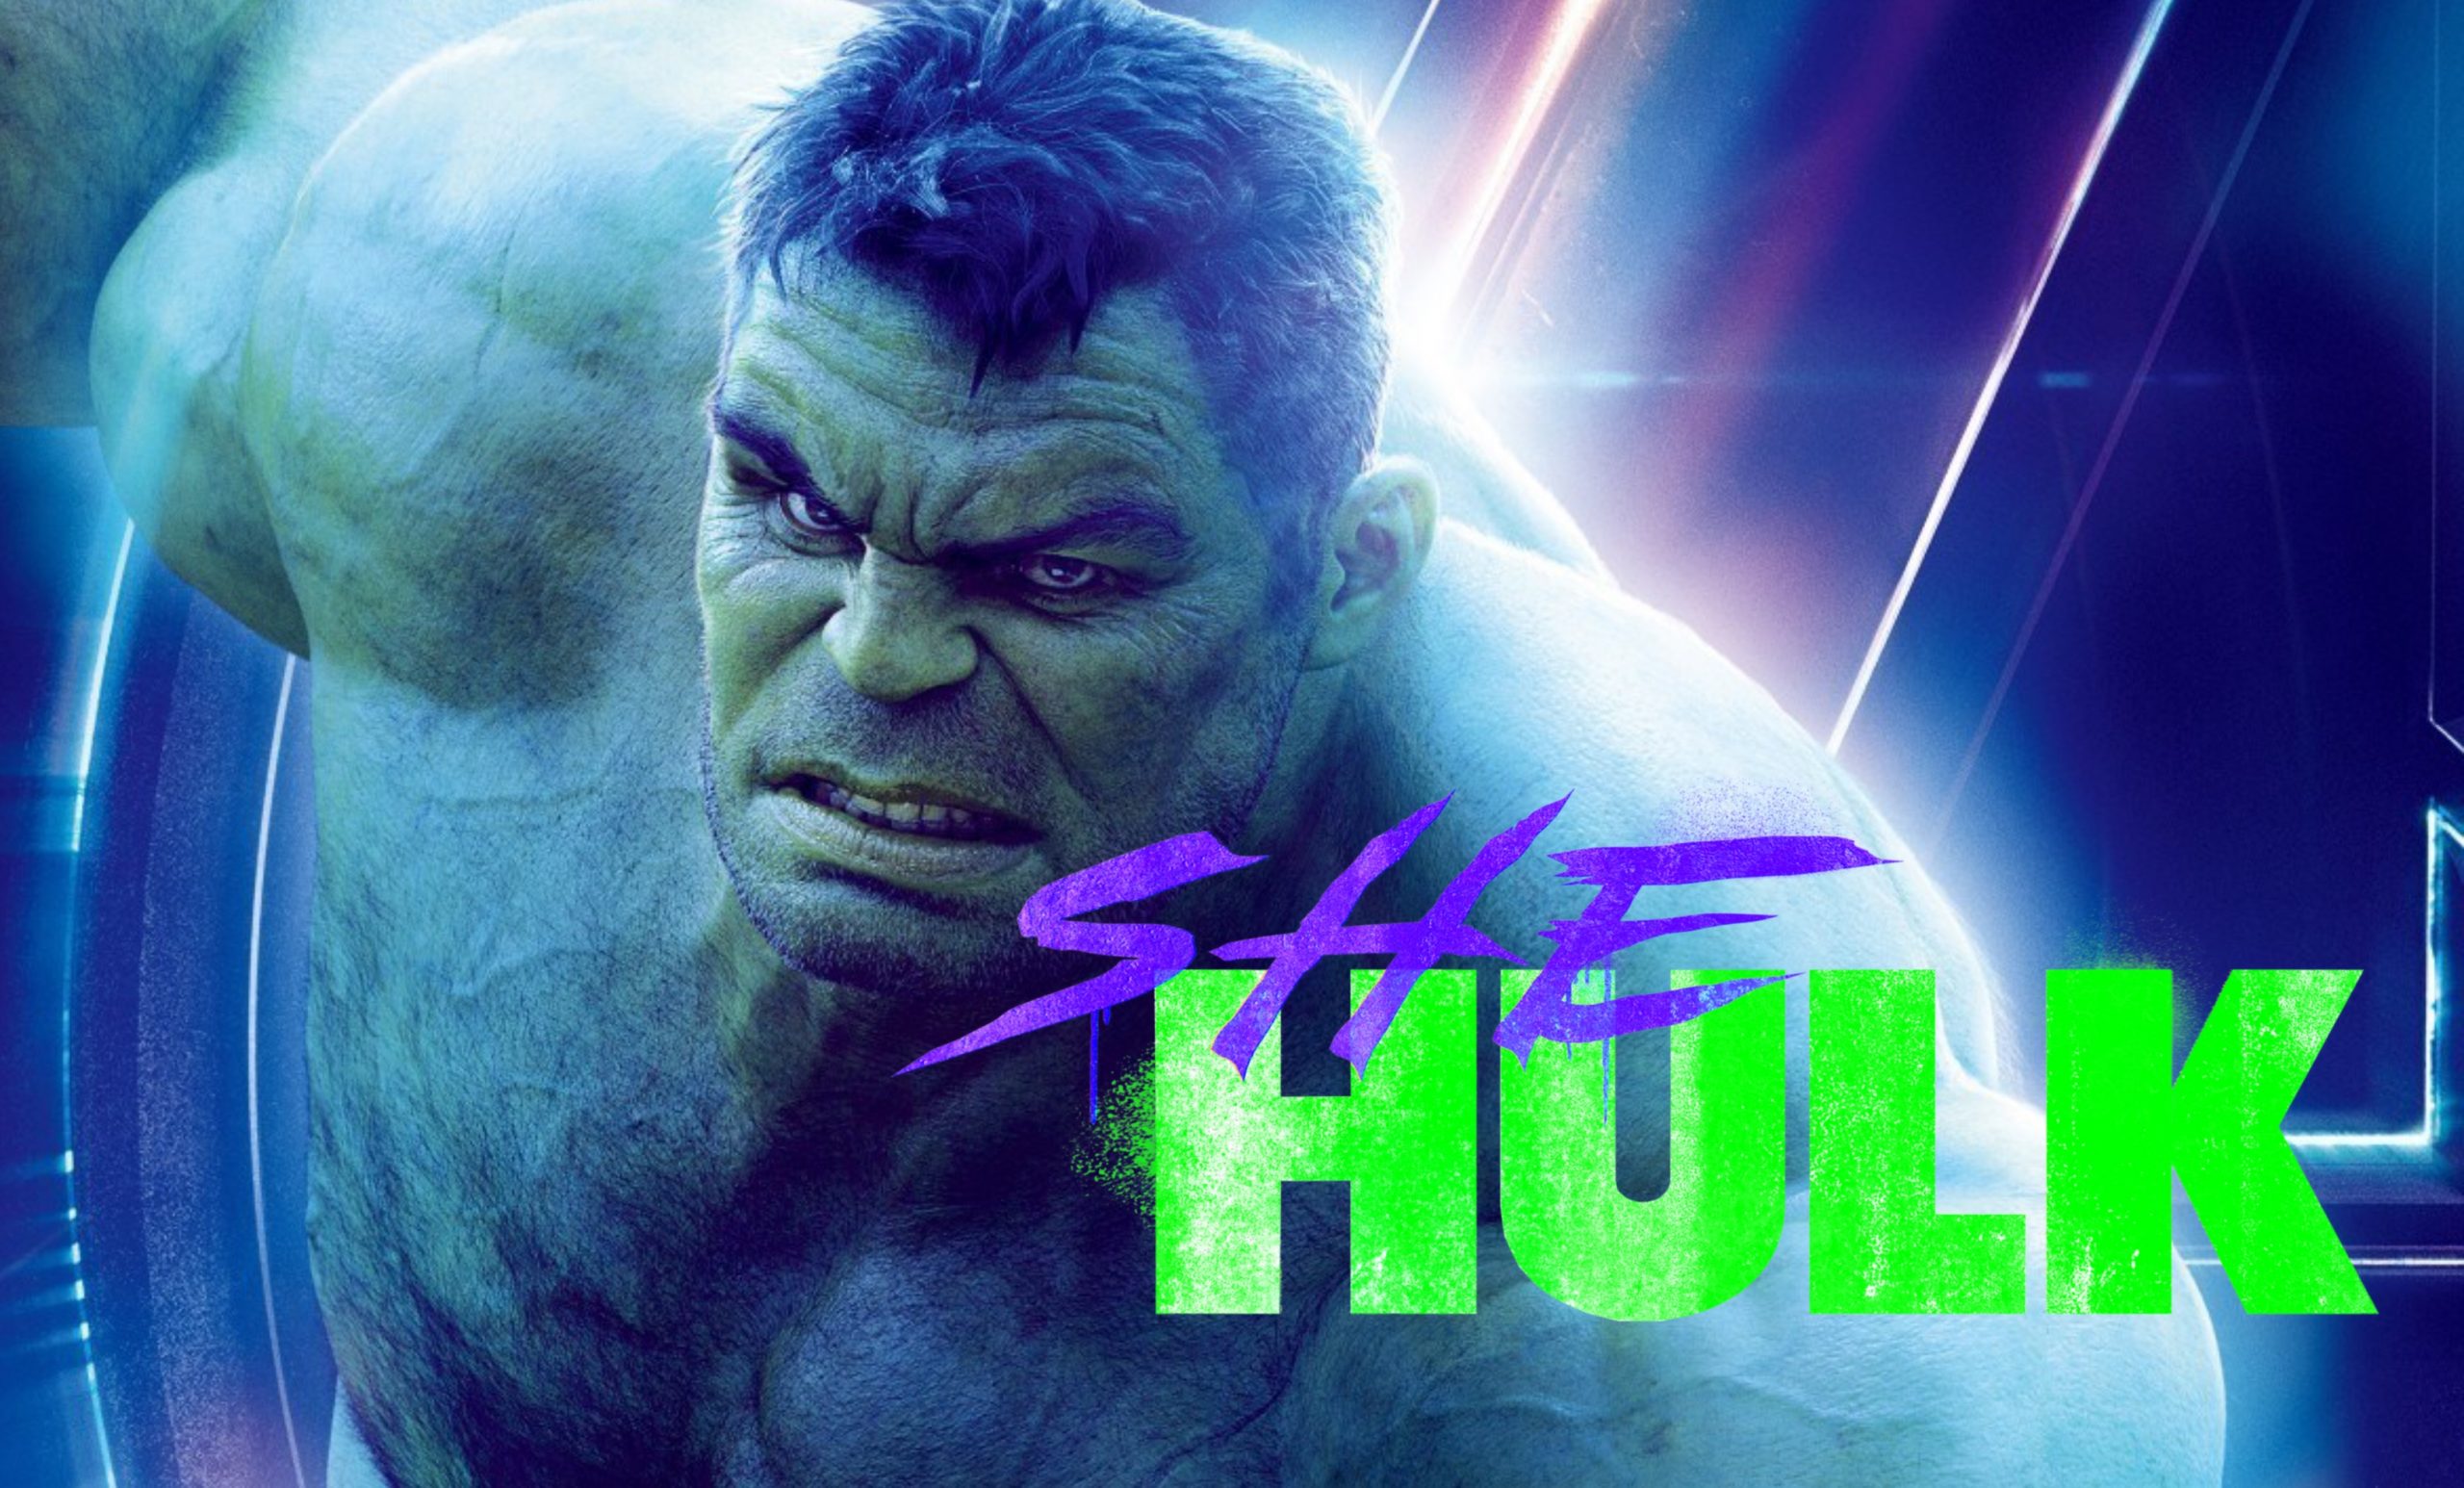 Mark Ruffalo Confirms “Talks” of His Appearance in Marvel Studios’ ‘She-Hulk’ Series